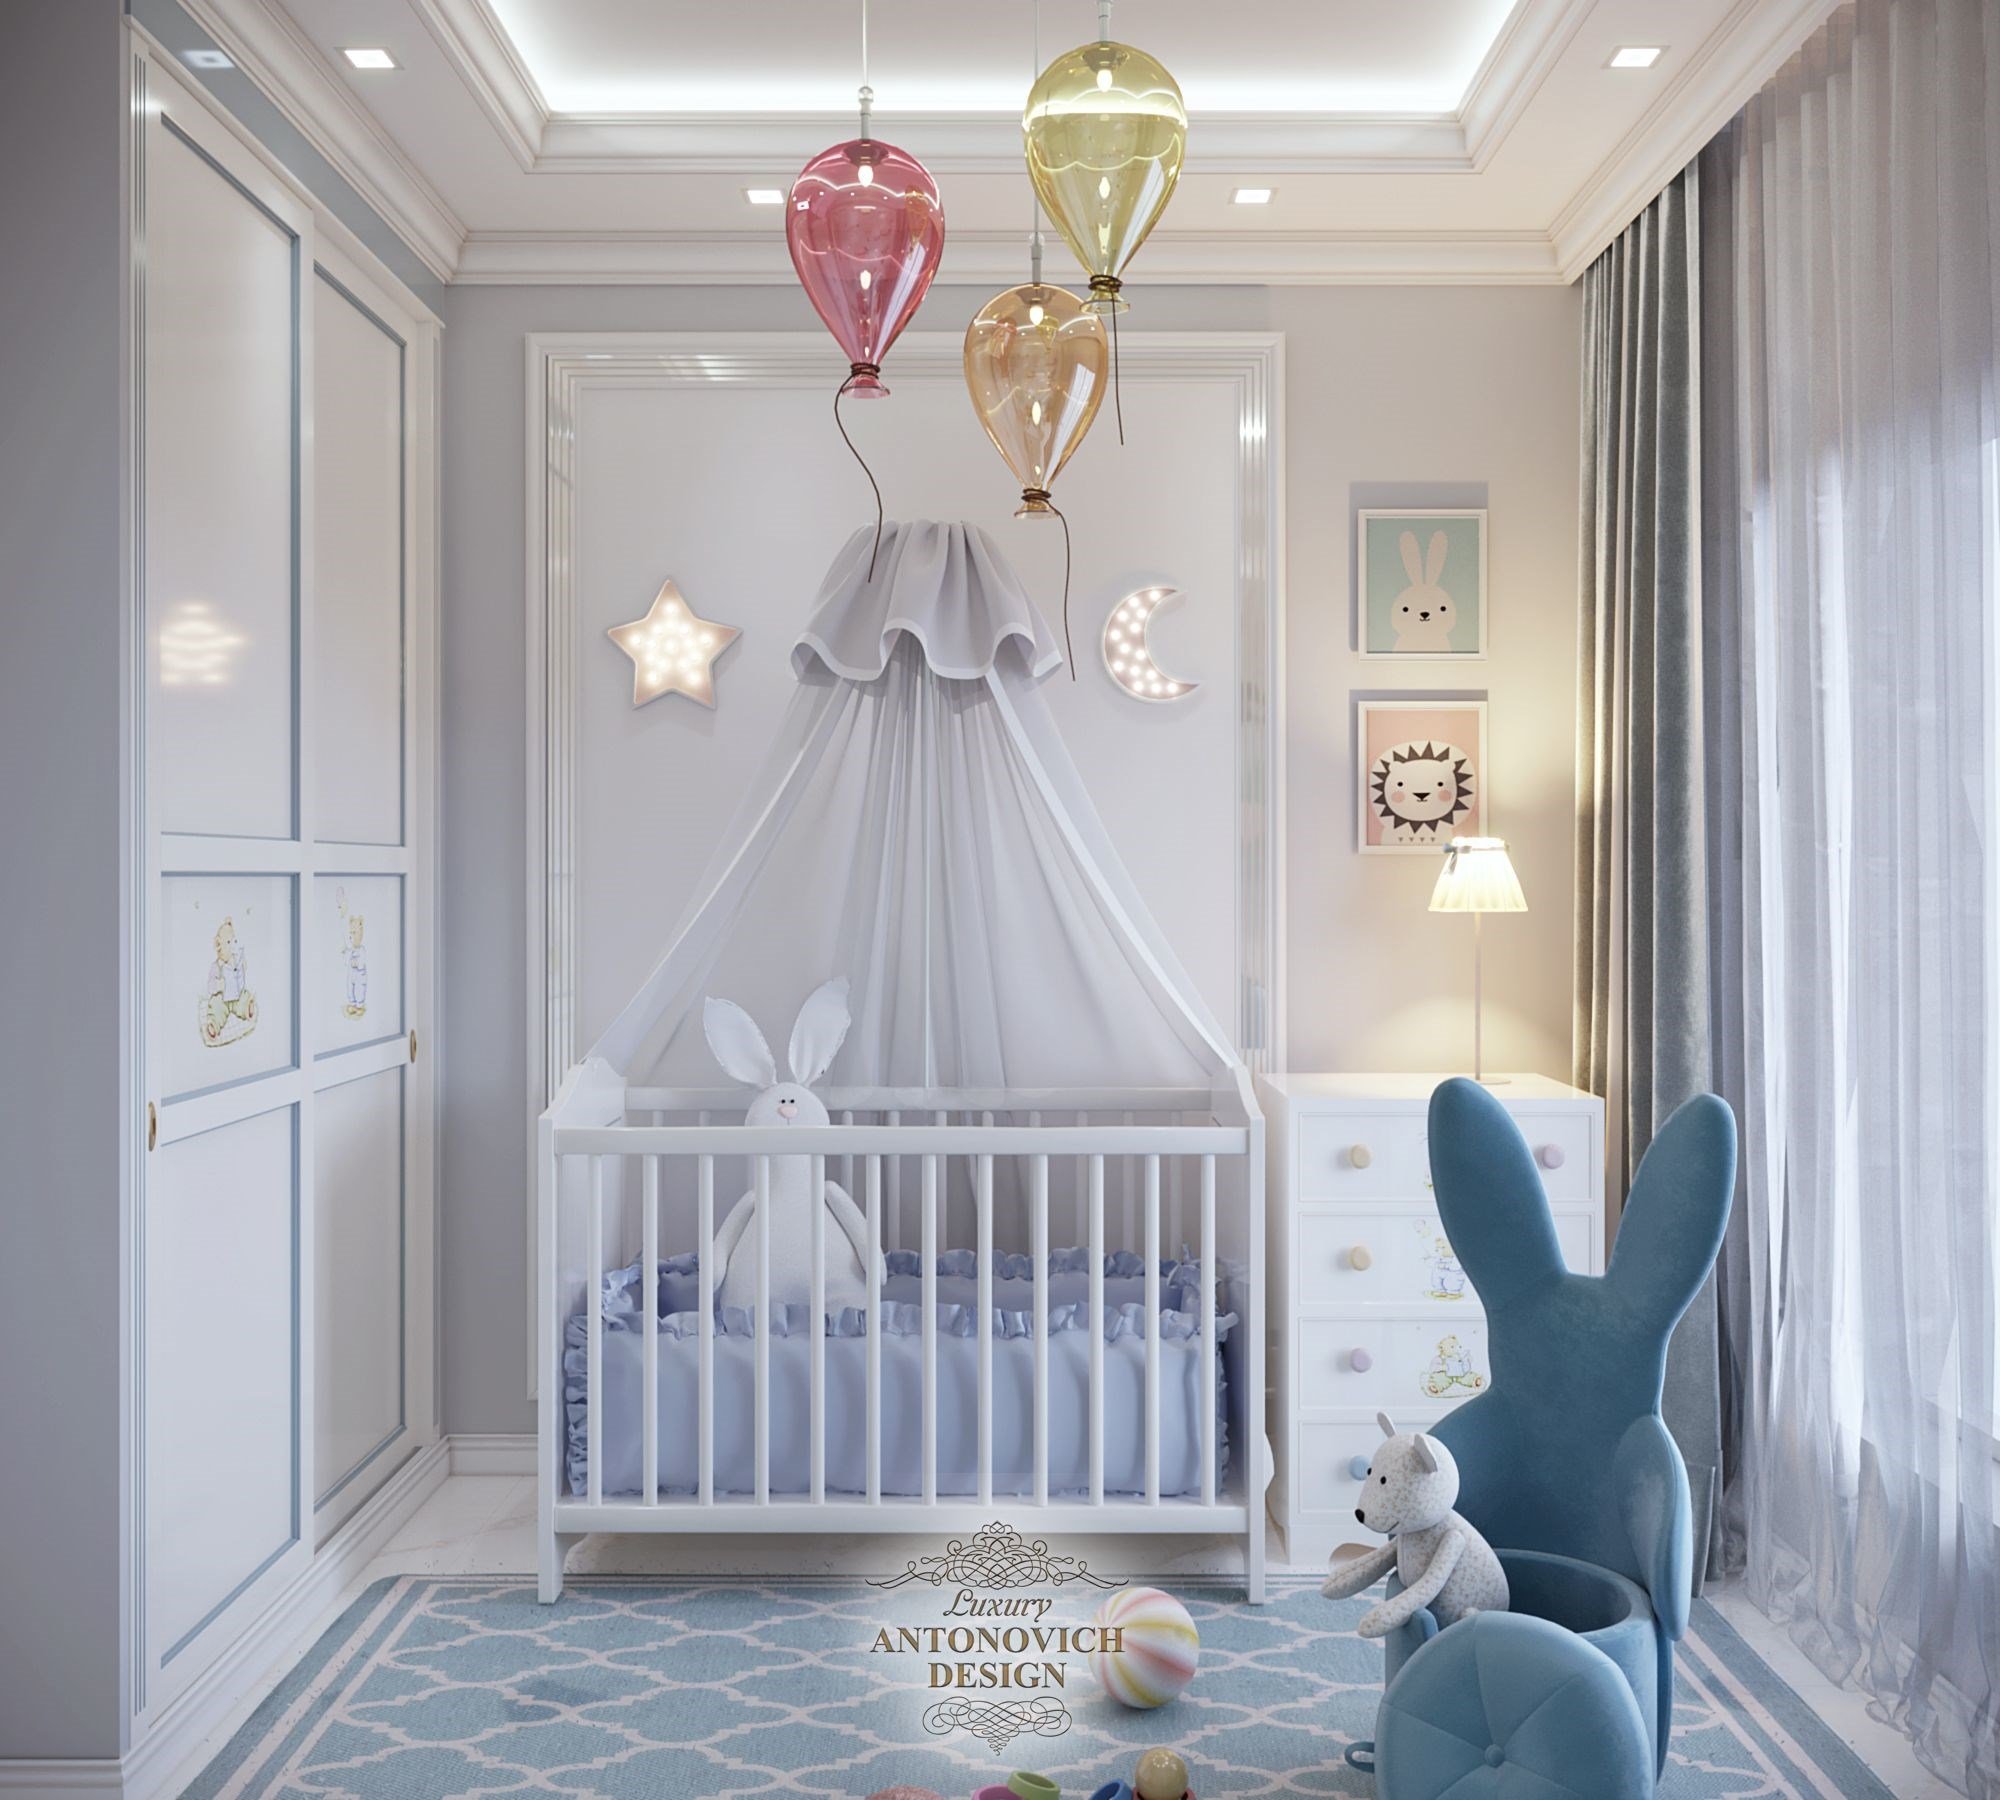 8 комната младенца 2_antonovich-design